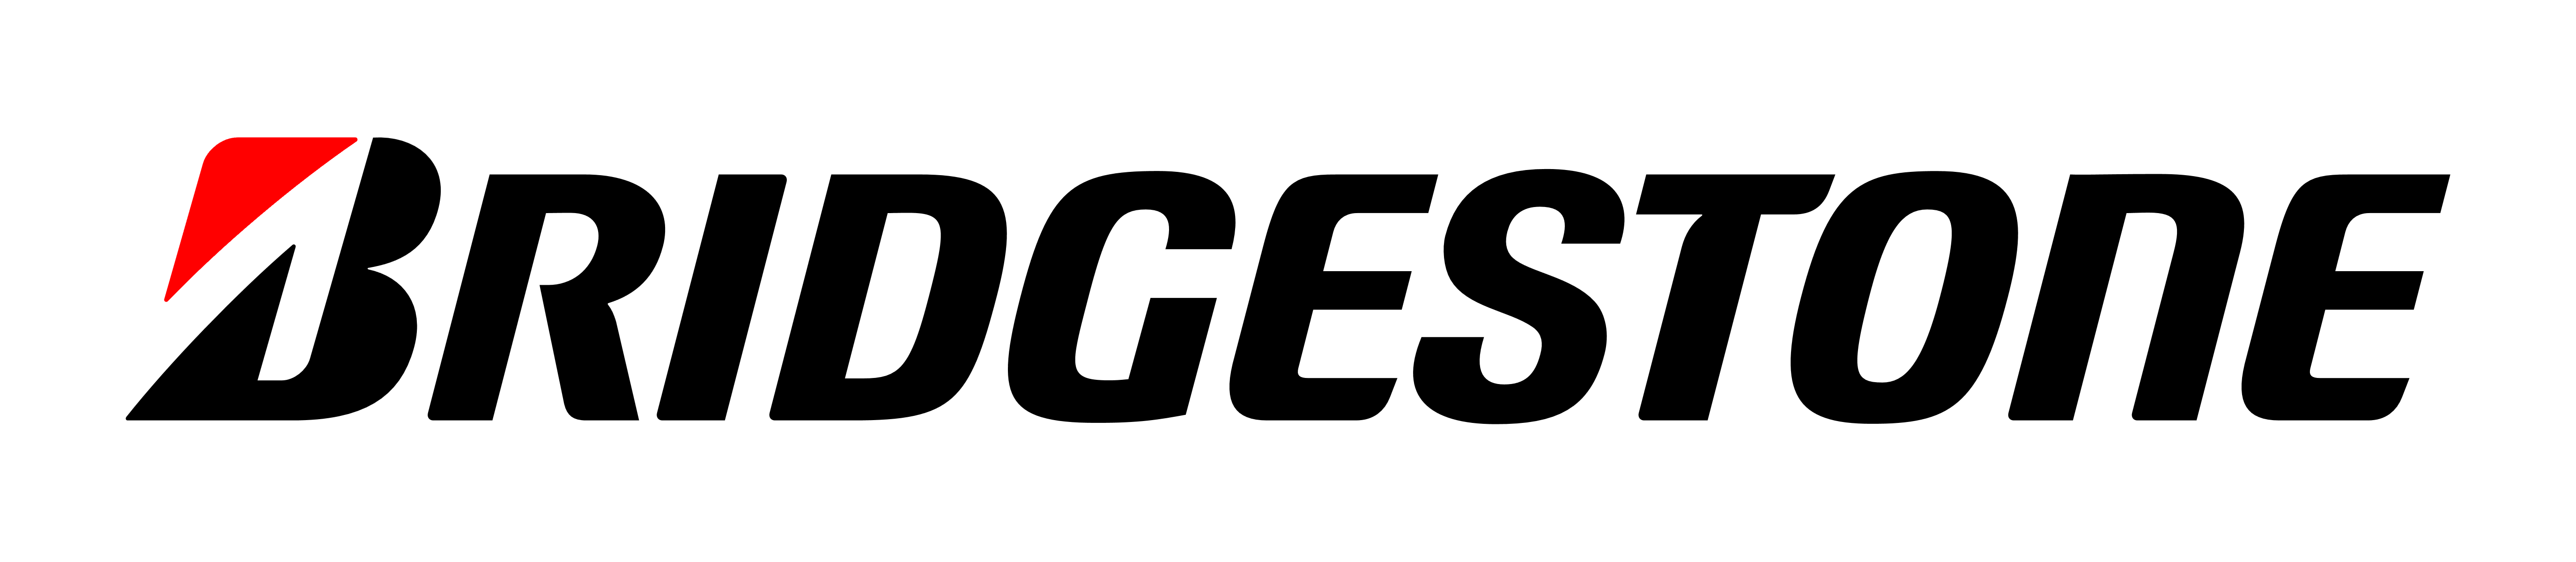 Bridgestone Logo PNG - 180777